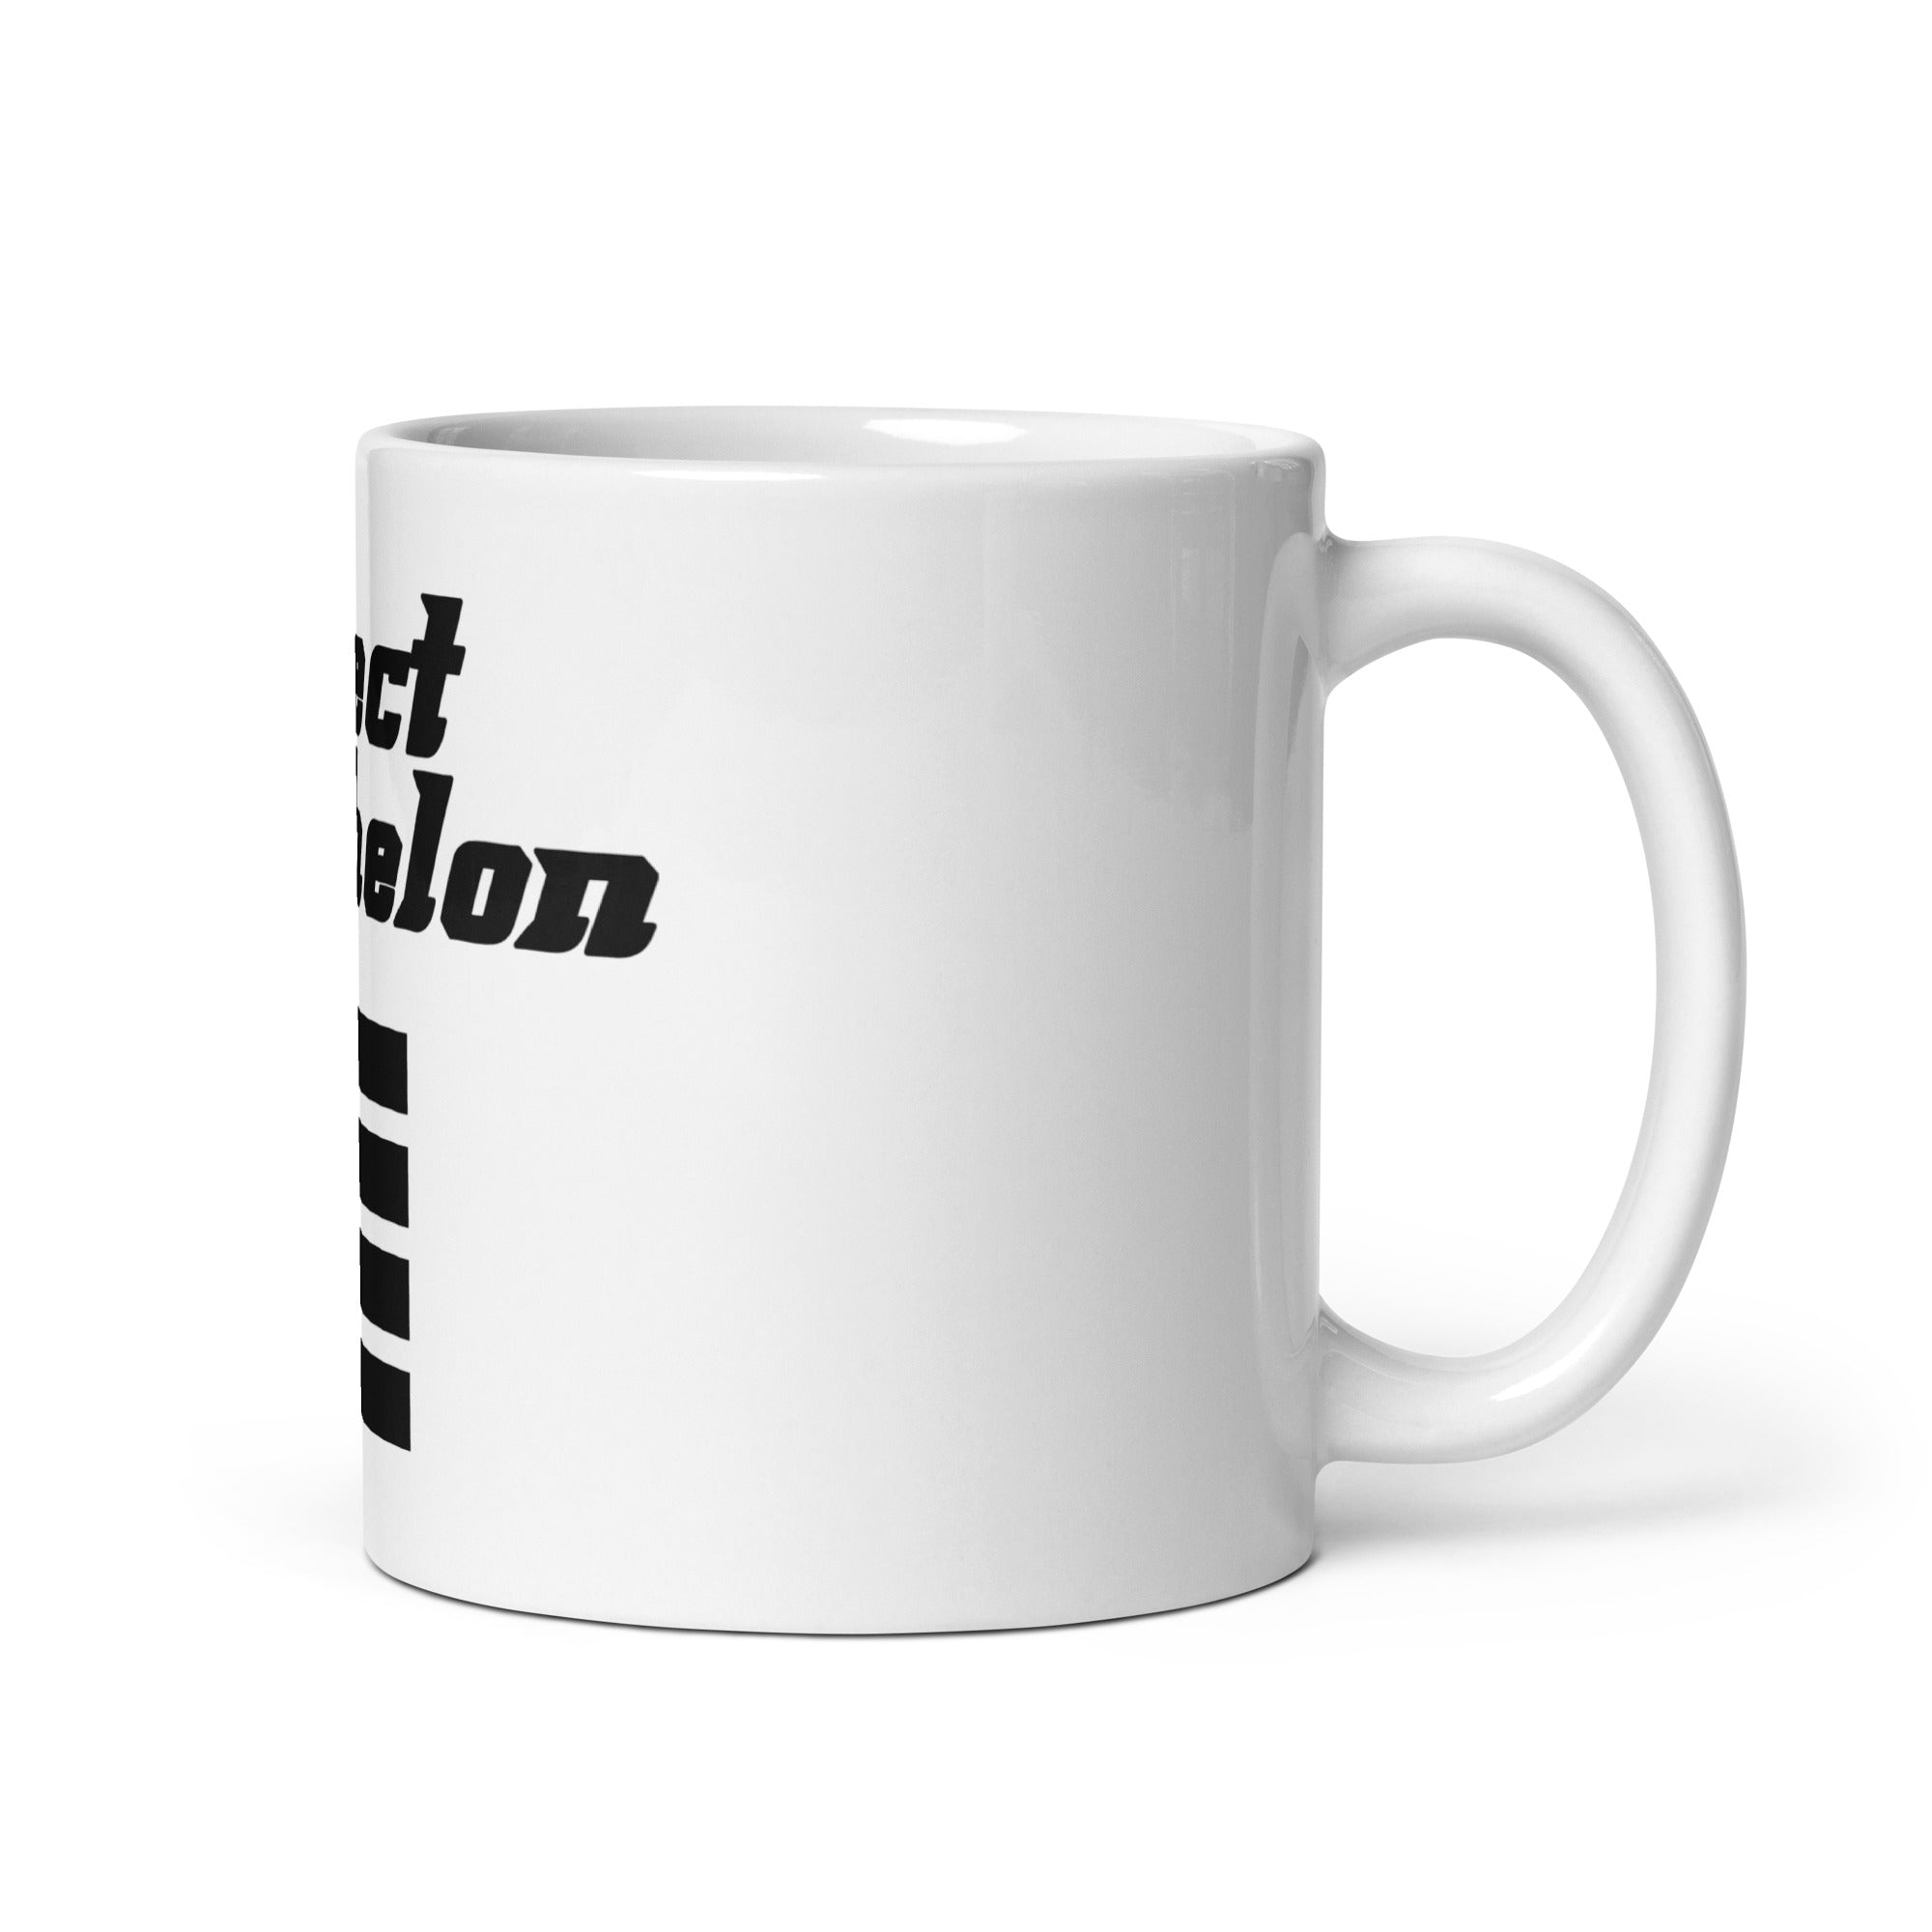 PROJECT ECHELON COFFE CUP